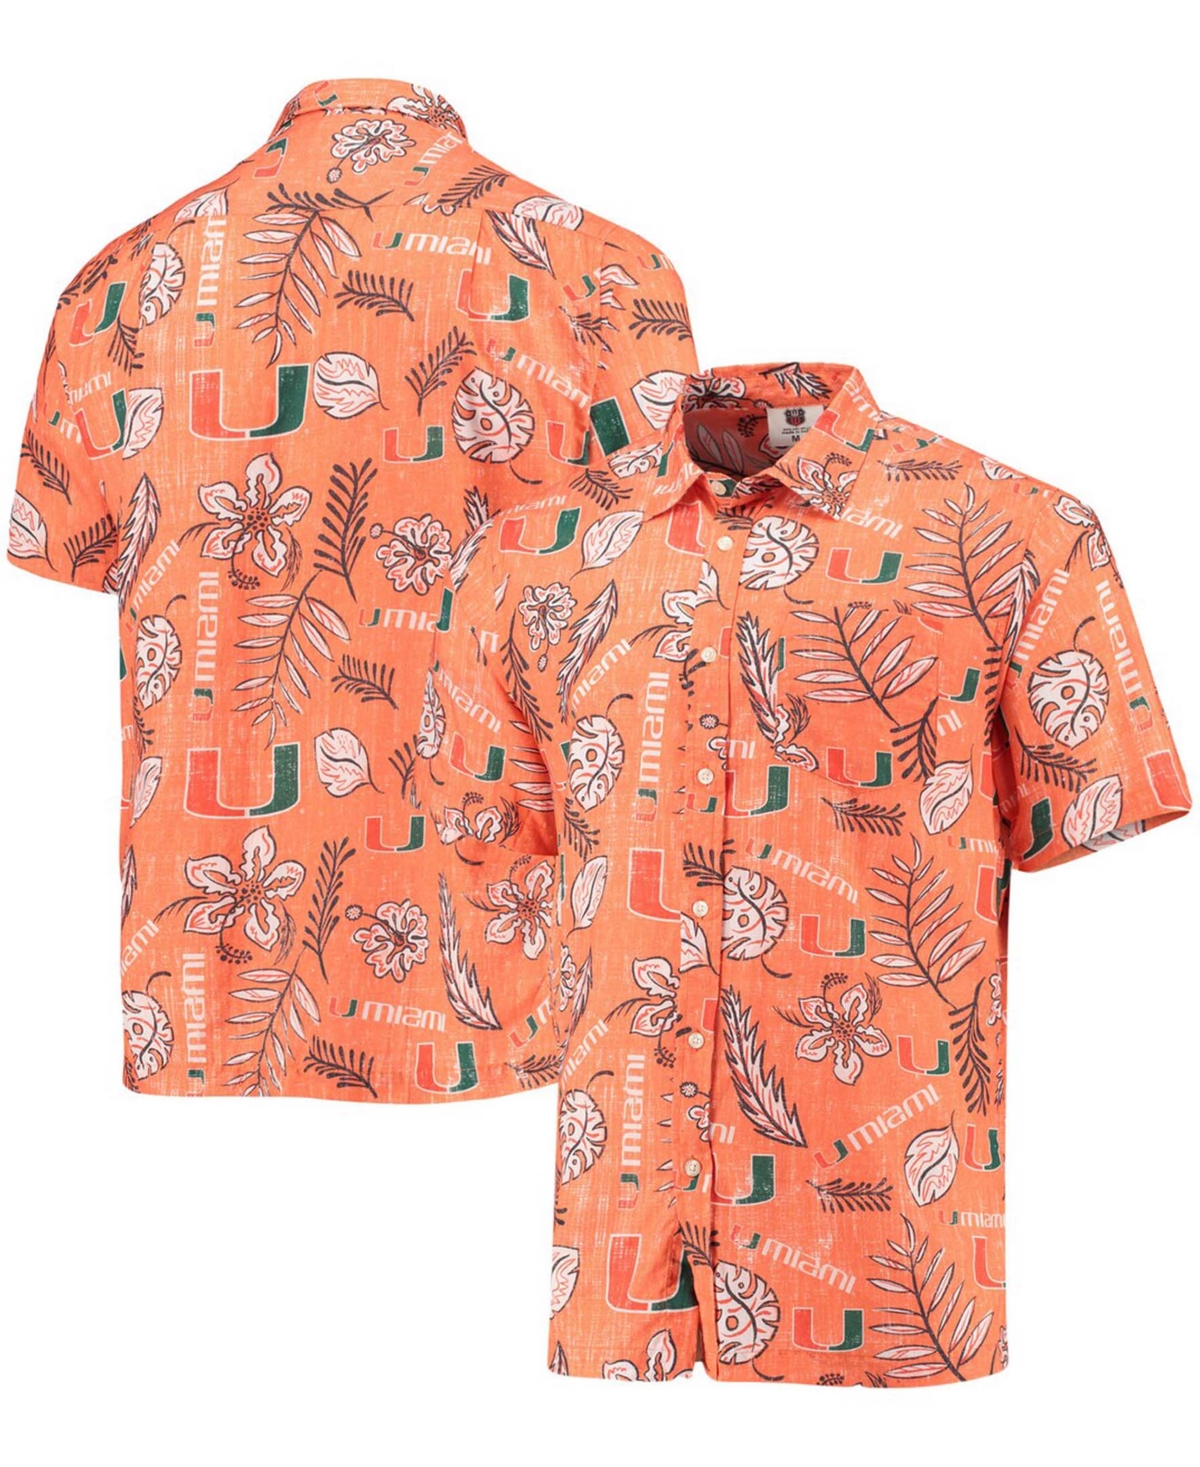 Men's Orange Miami Hurricanes Vintage-Like Floral Button-Up Shirt - Orange